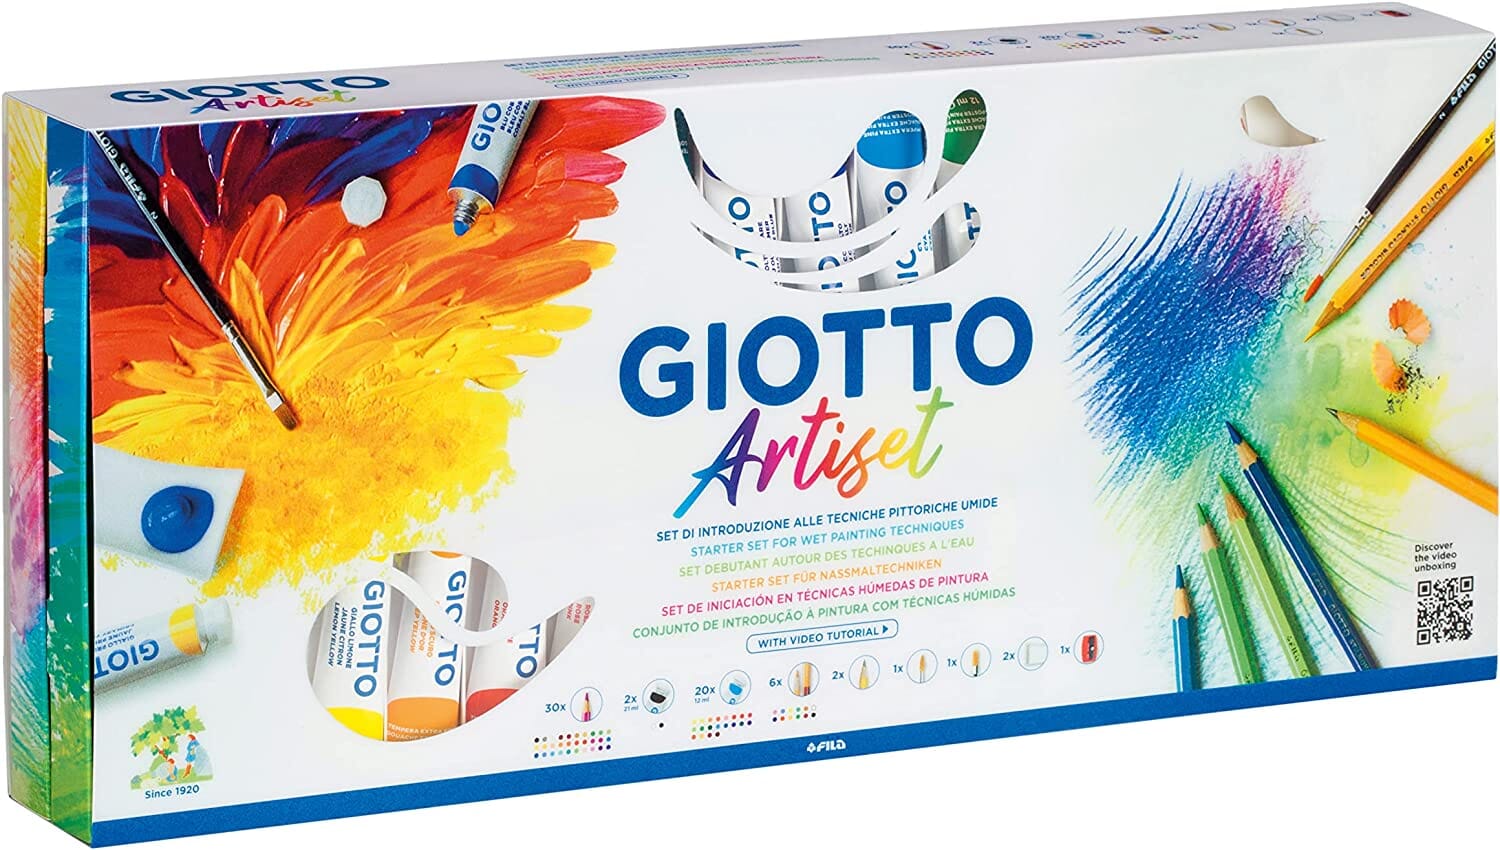 Giotto Artiset FILA toysvaldichiana.it 